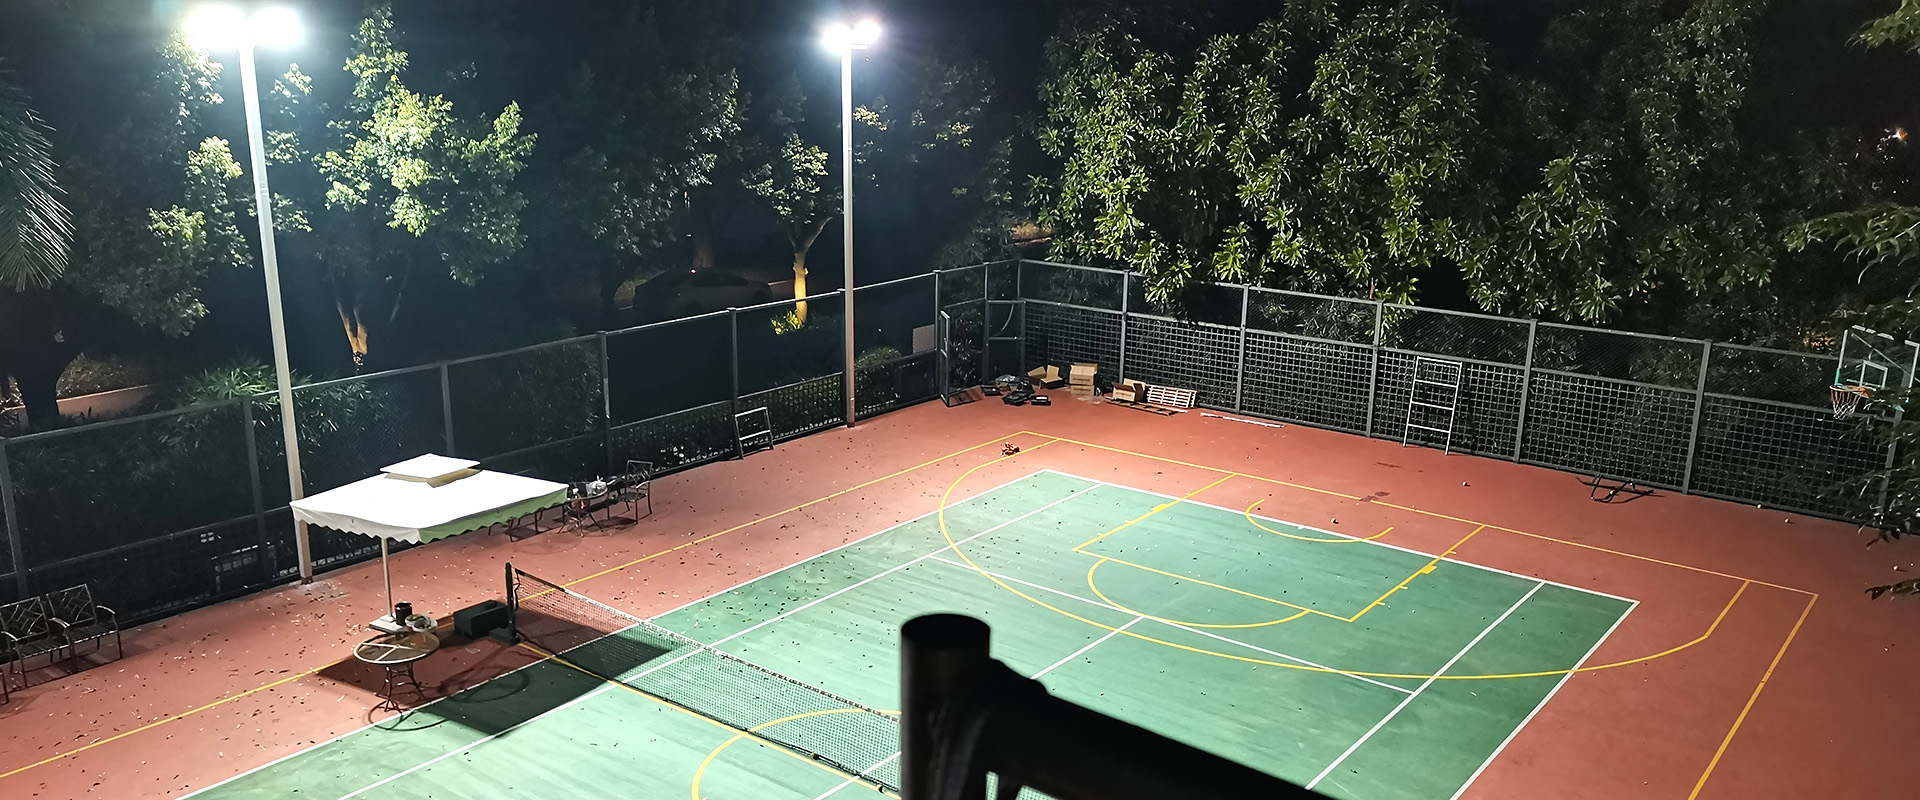 Tennis stadium lighting scheme